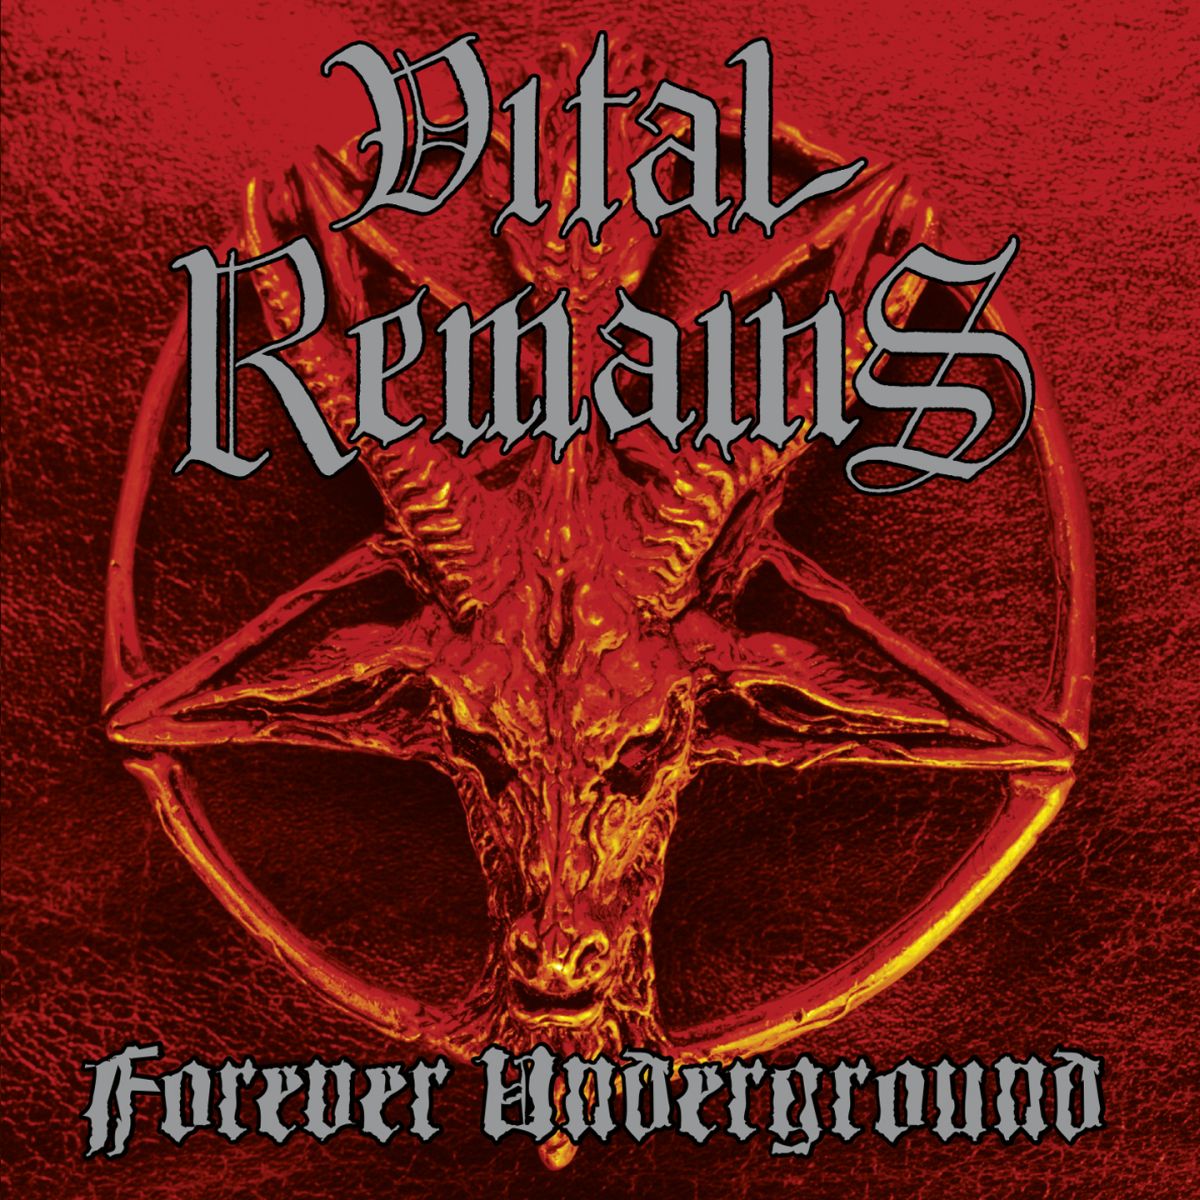 sm-metal-shop.de - VITAL REMAINS - Forever Underground CD